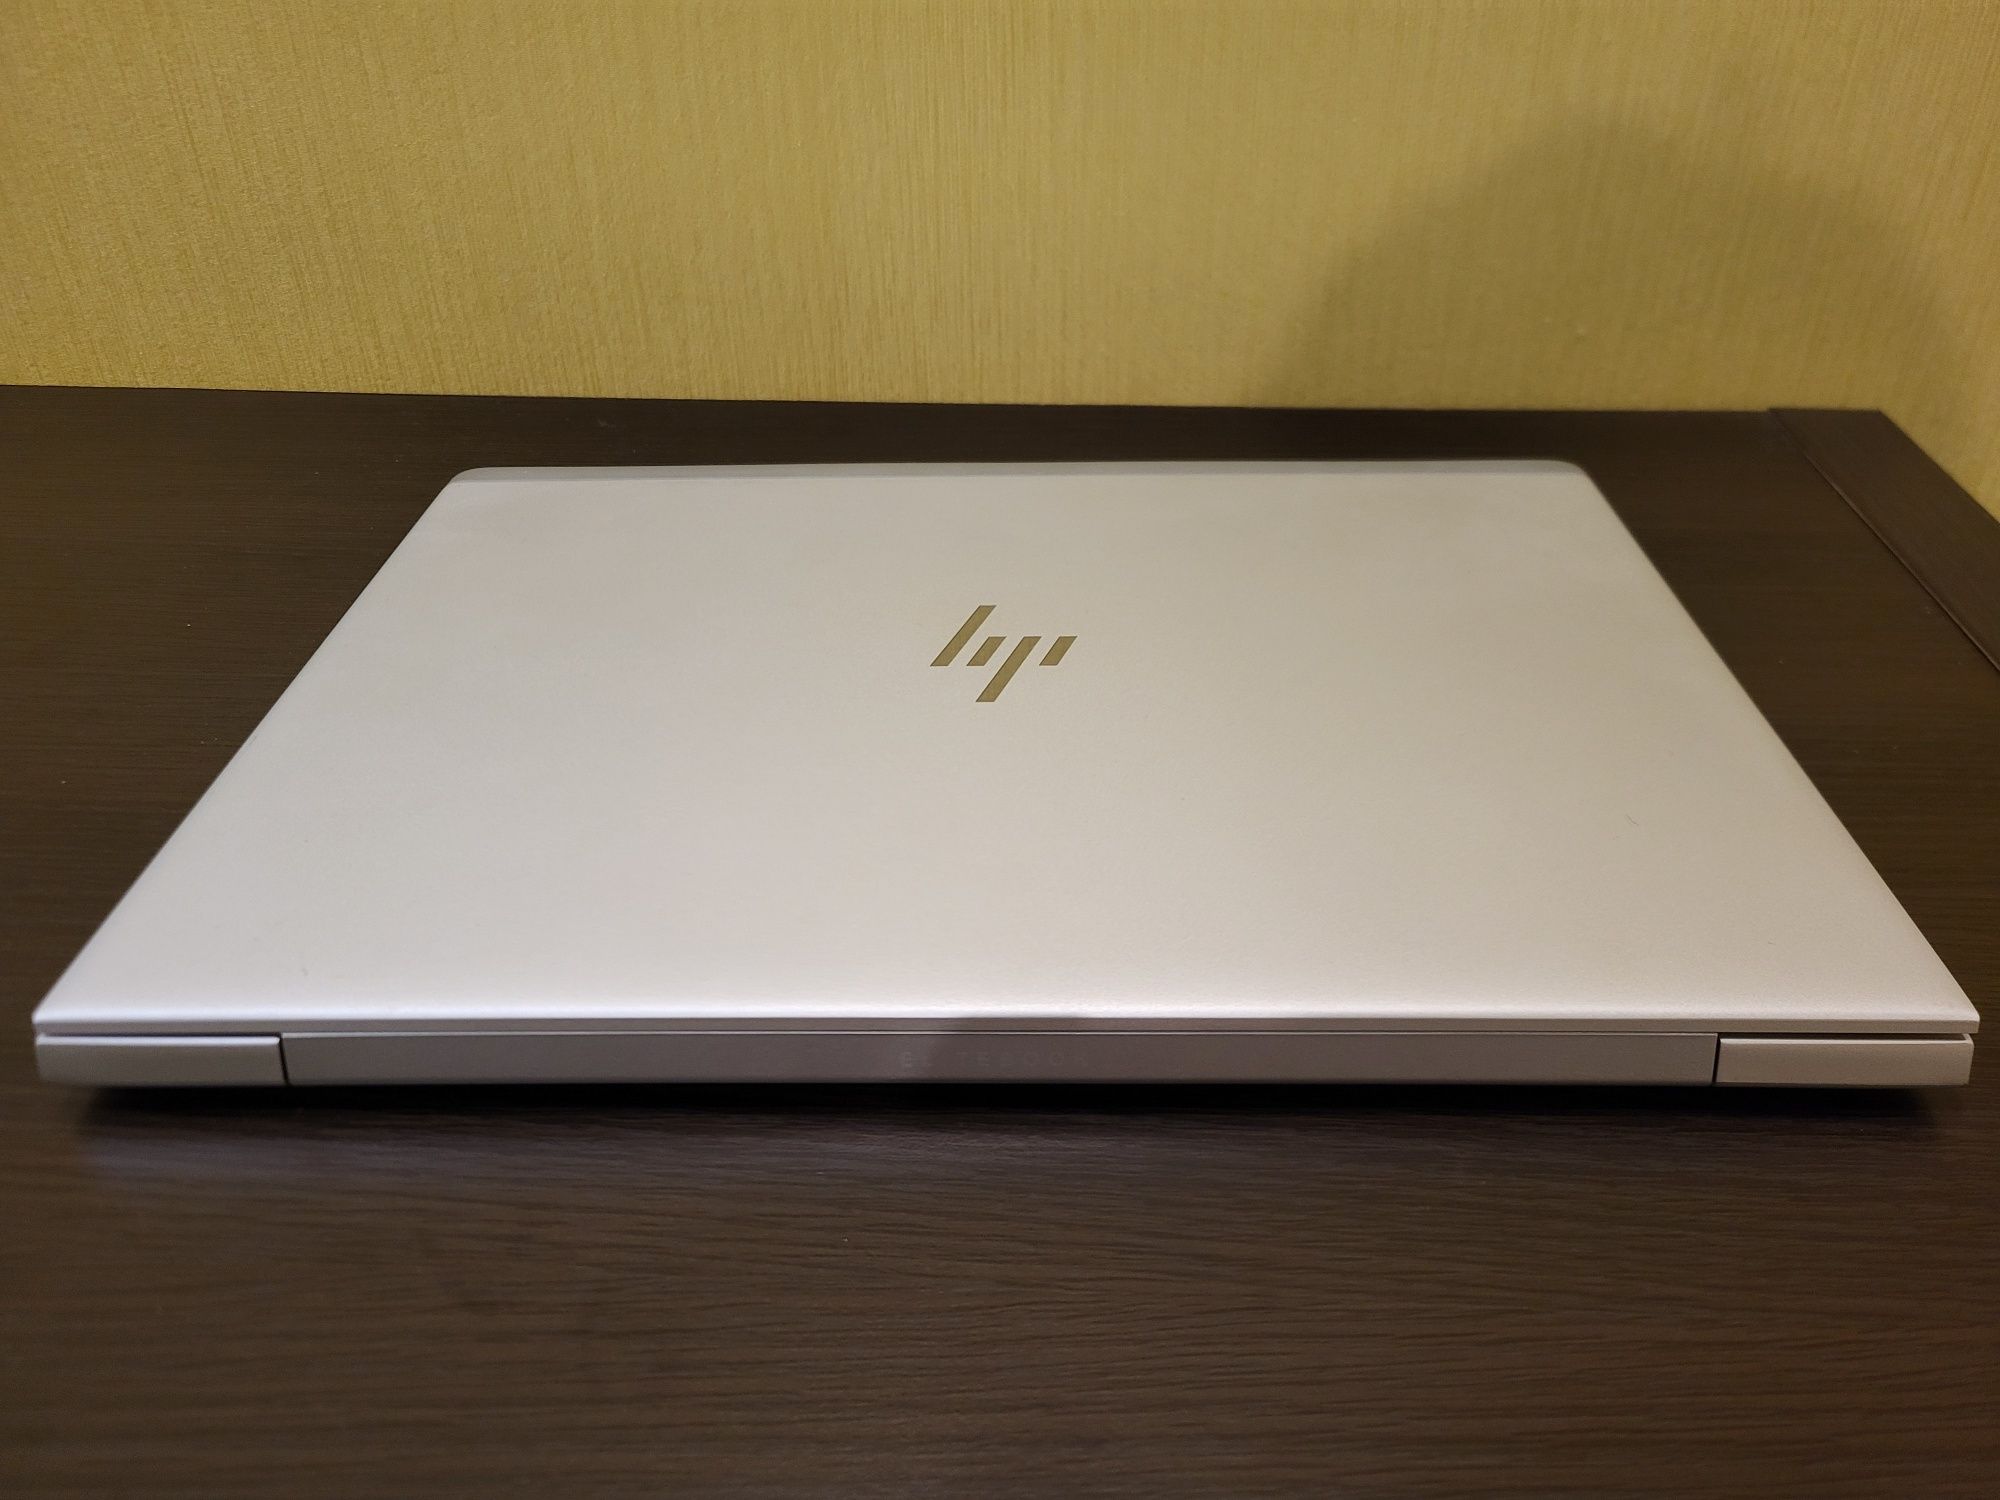 Ноутбук HP EliteBook 840 G5 Intel Core i5-8250U 1.6GHz 8GB/256GB SSD